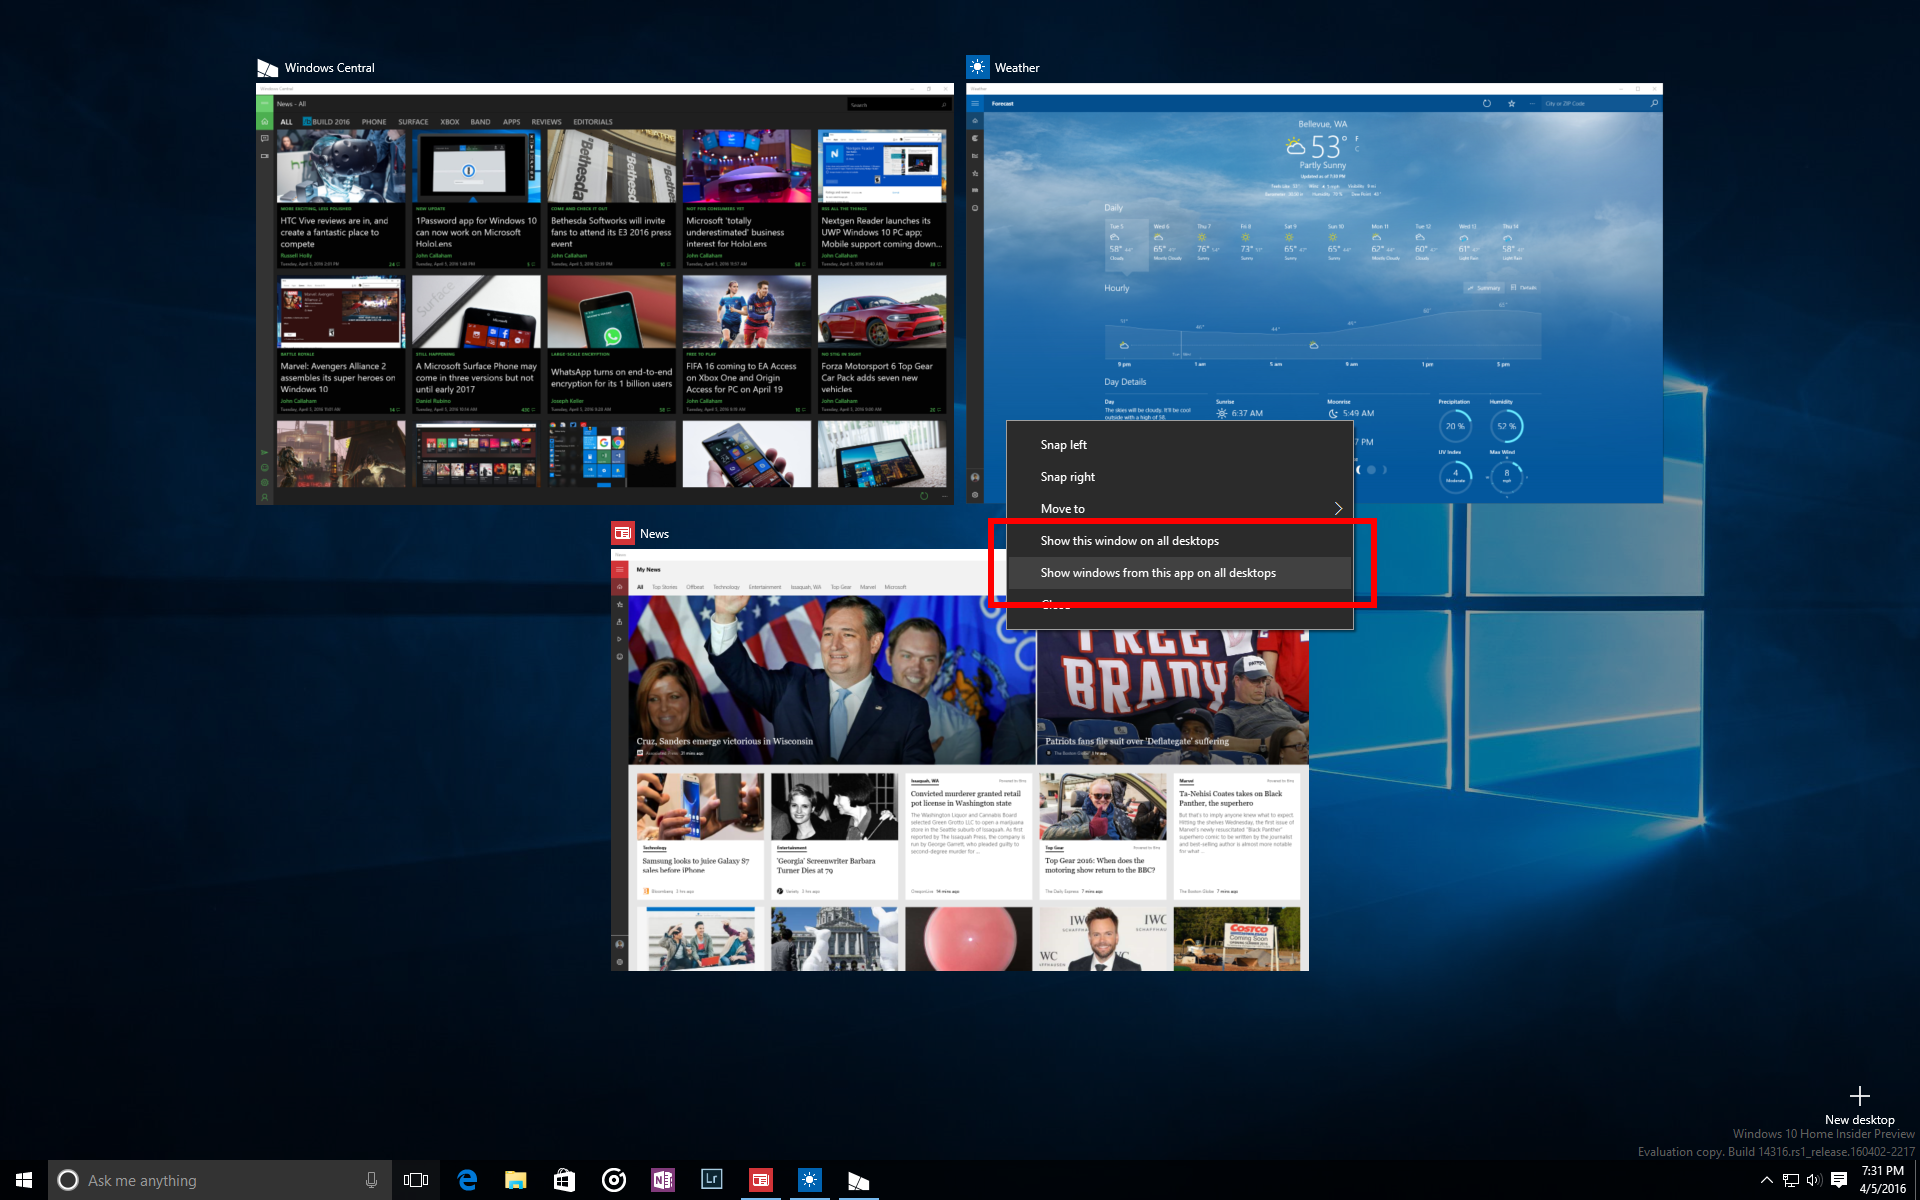 Windows 10 Insider Preview Build 14316 - vd-show-all-desktops